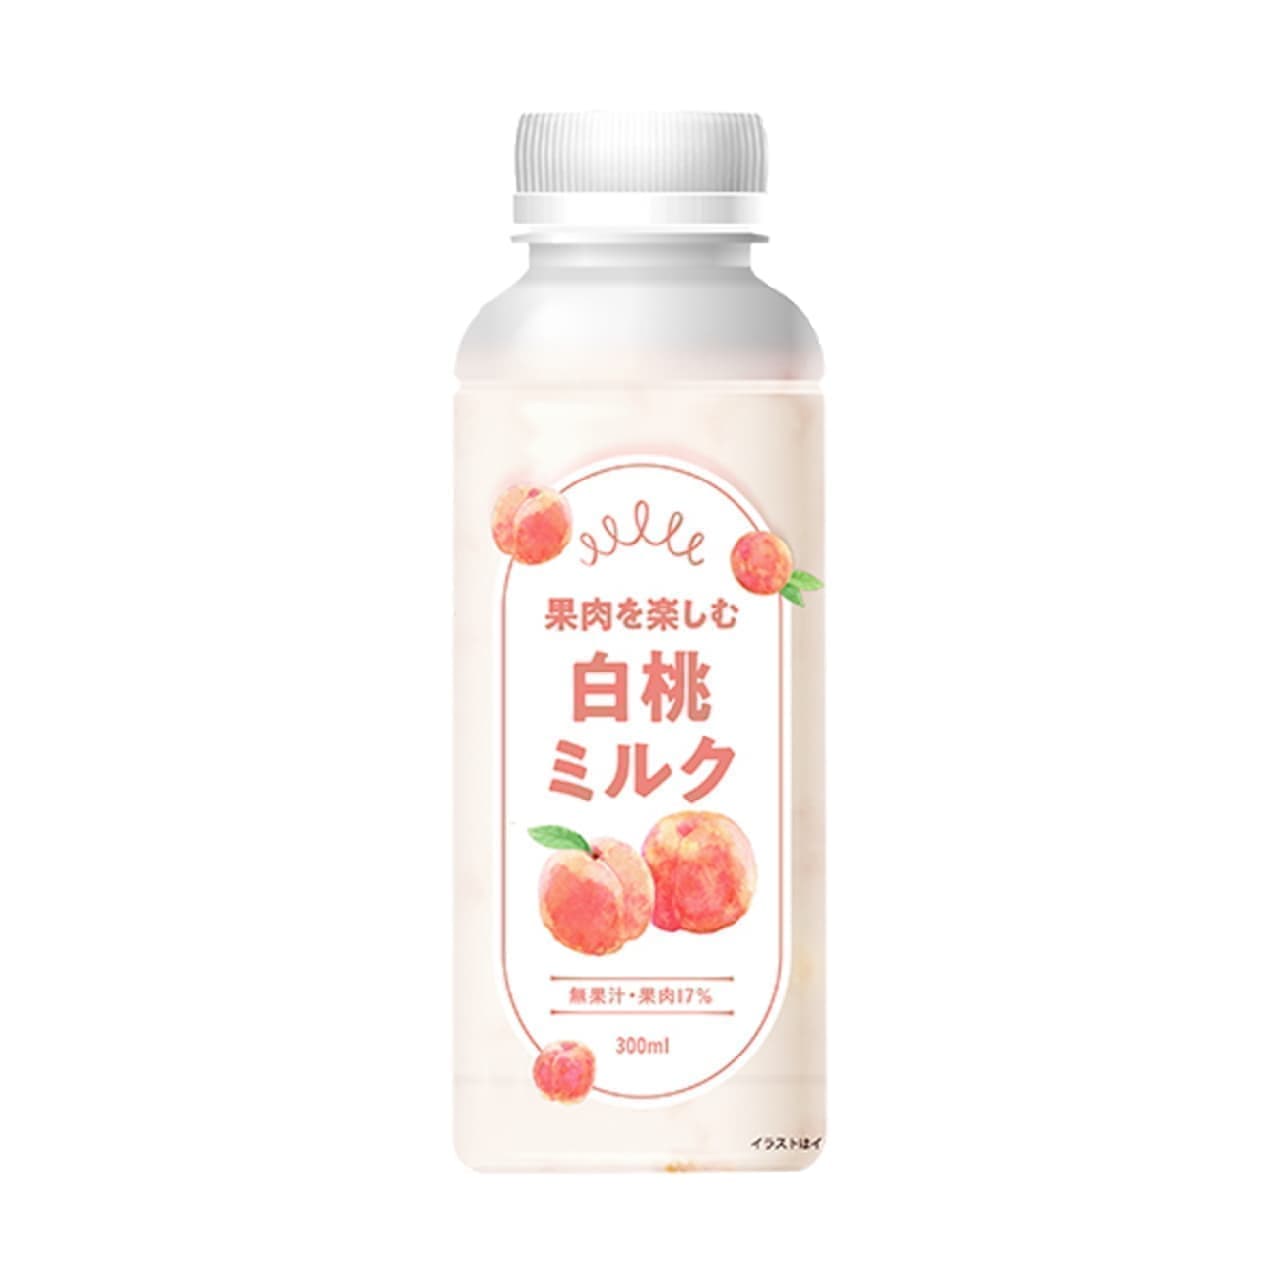 FamilyMart "White Peach Milk